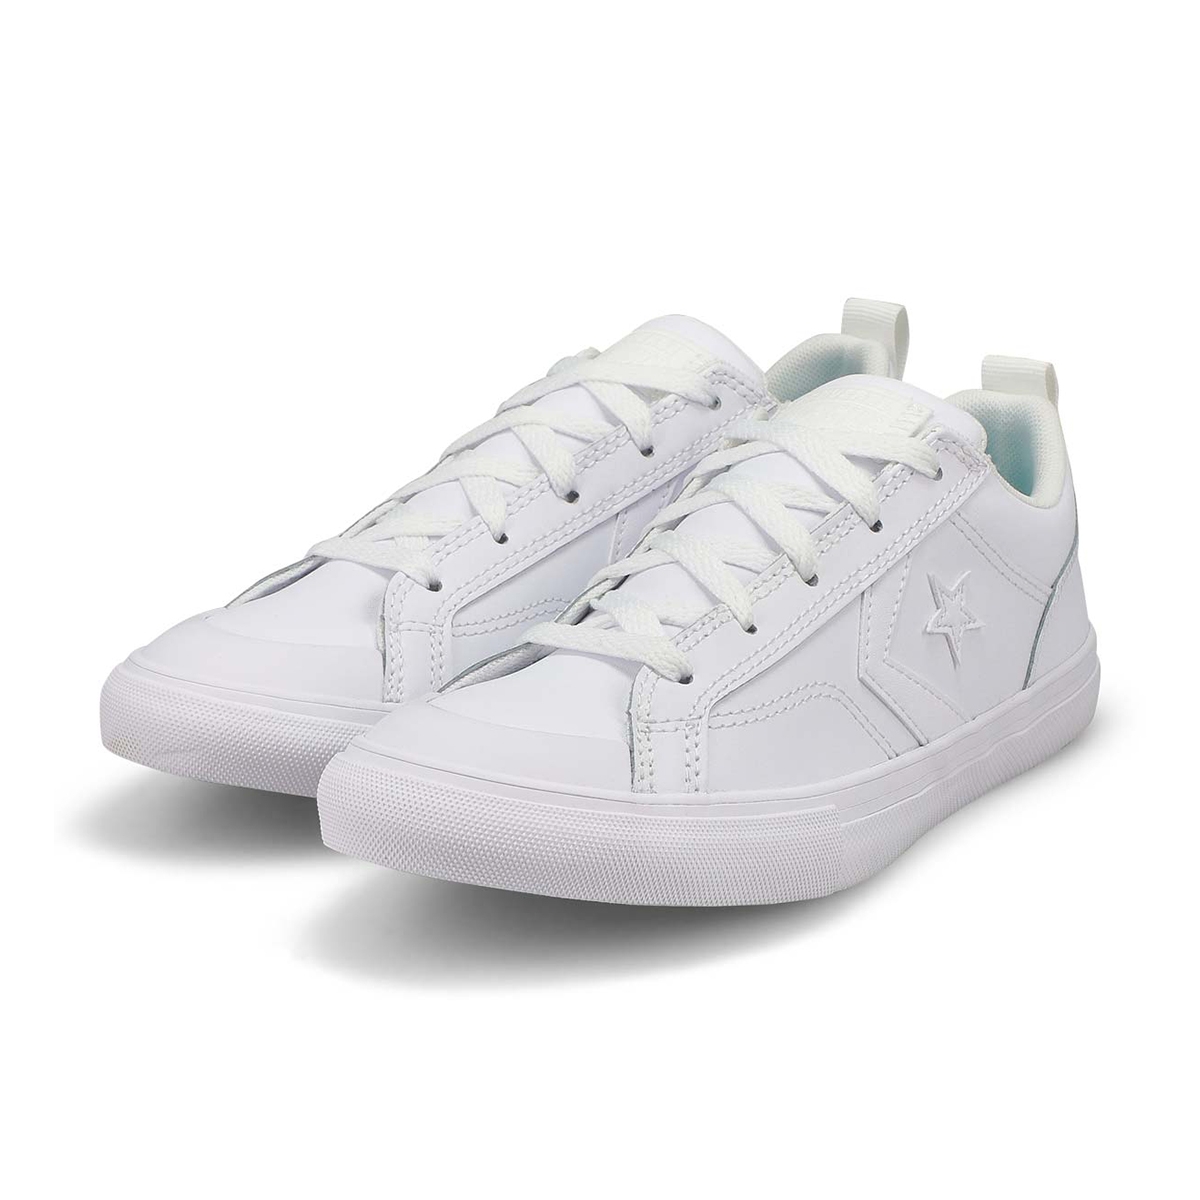 Boy's Pro Blaze Leather Sneaker - White/White